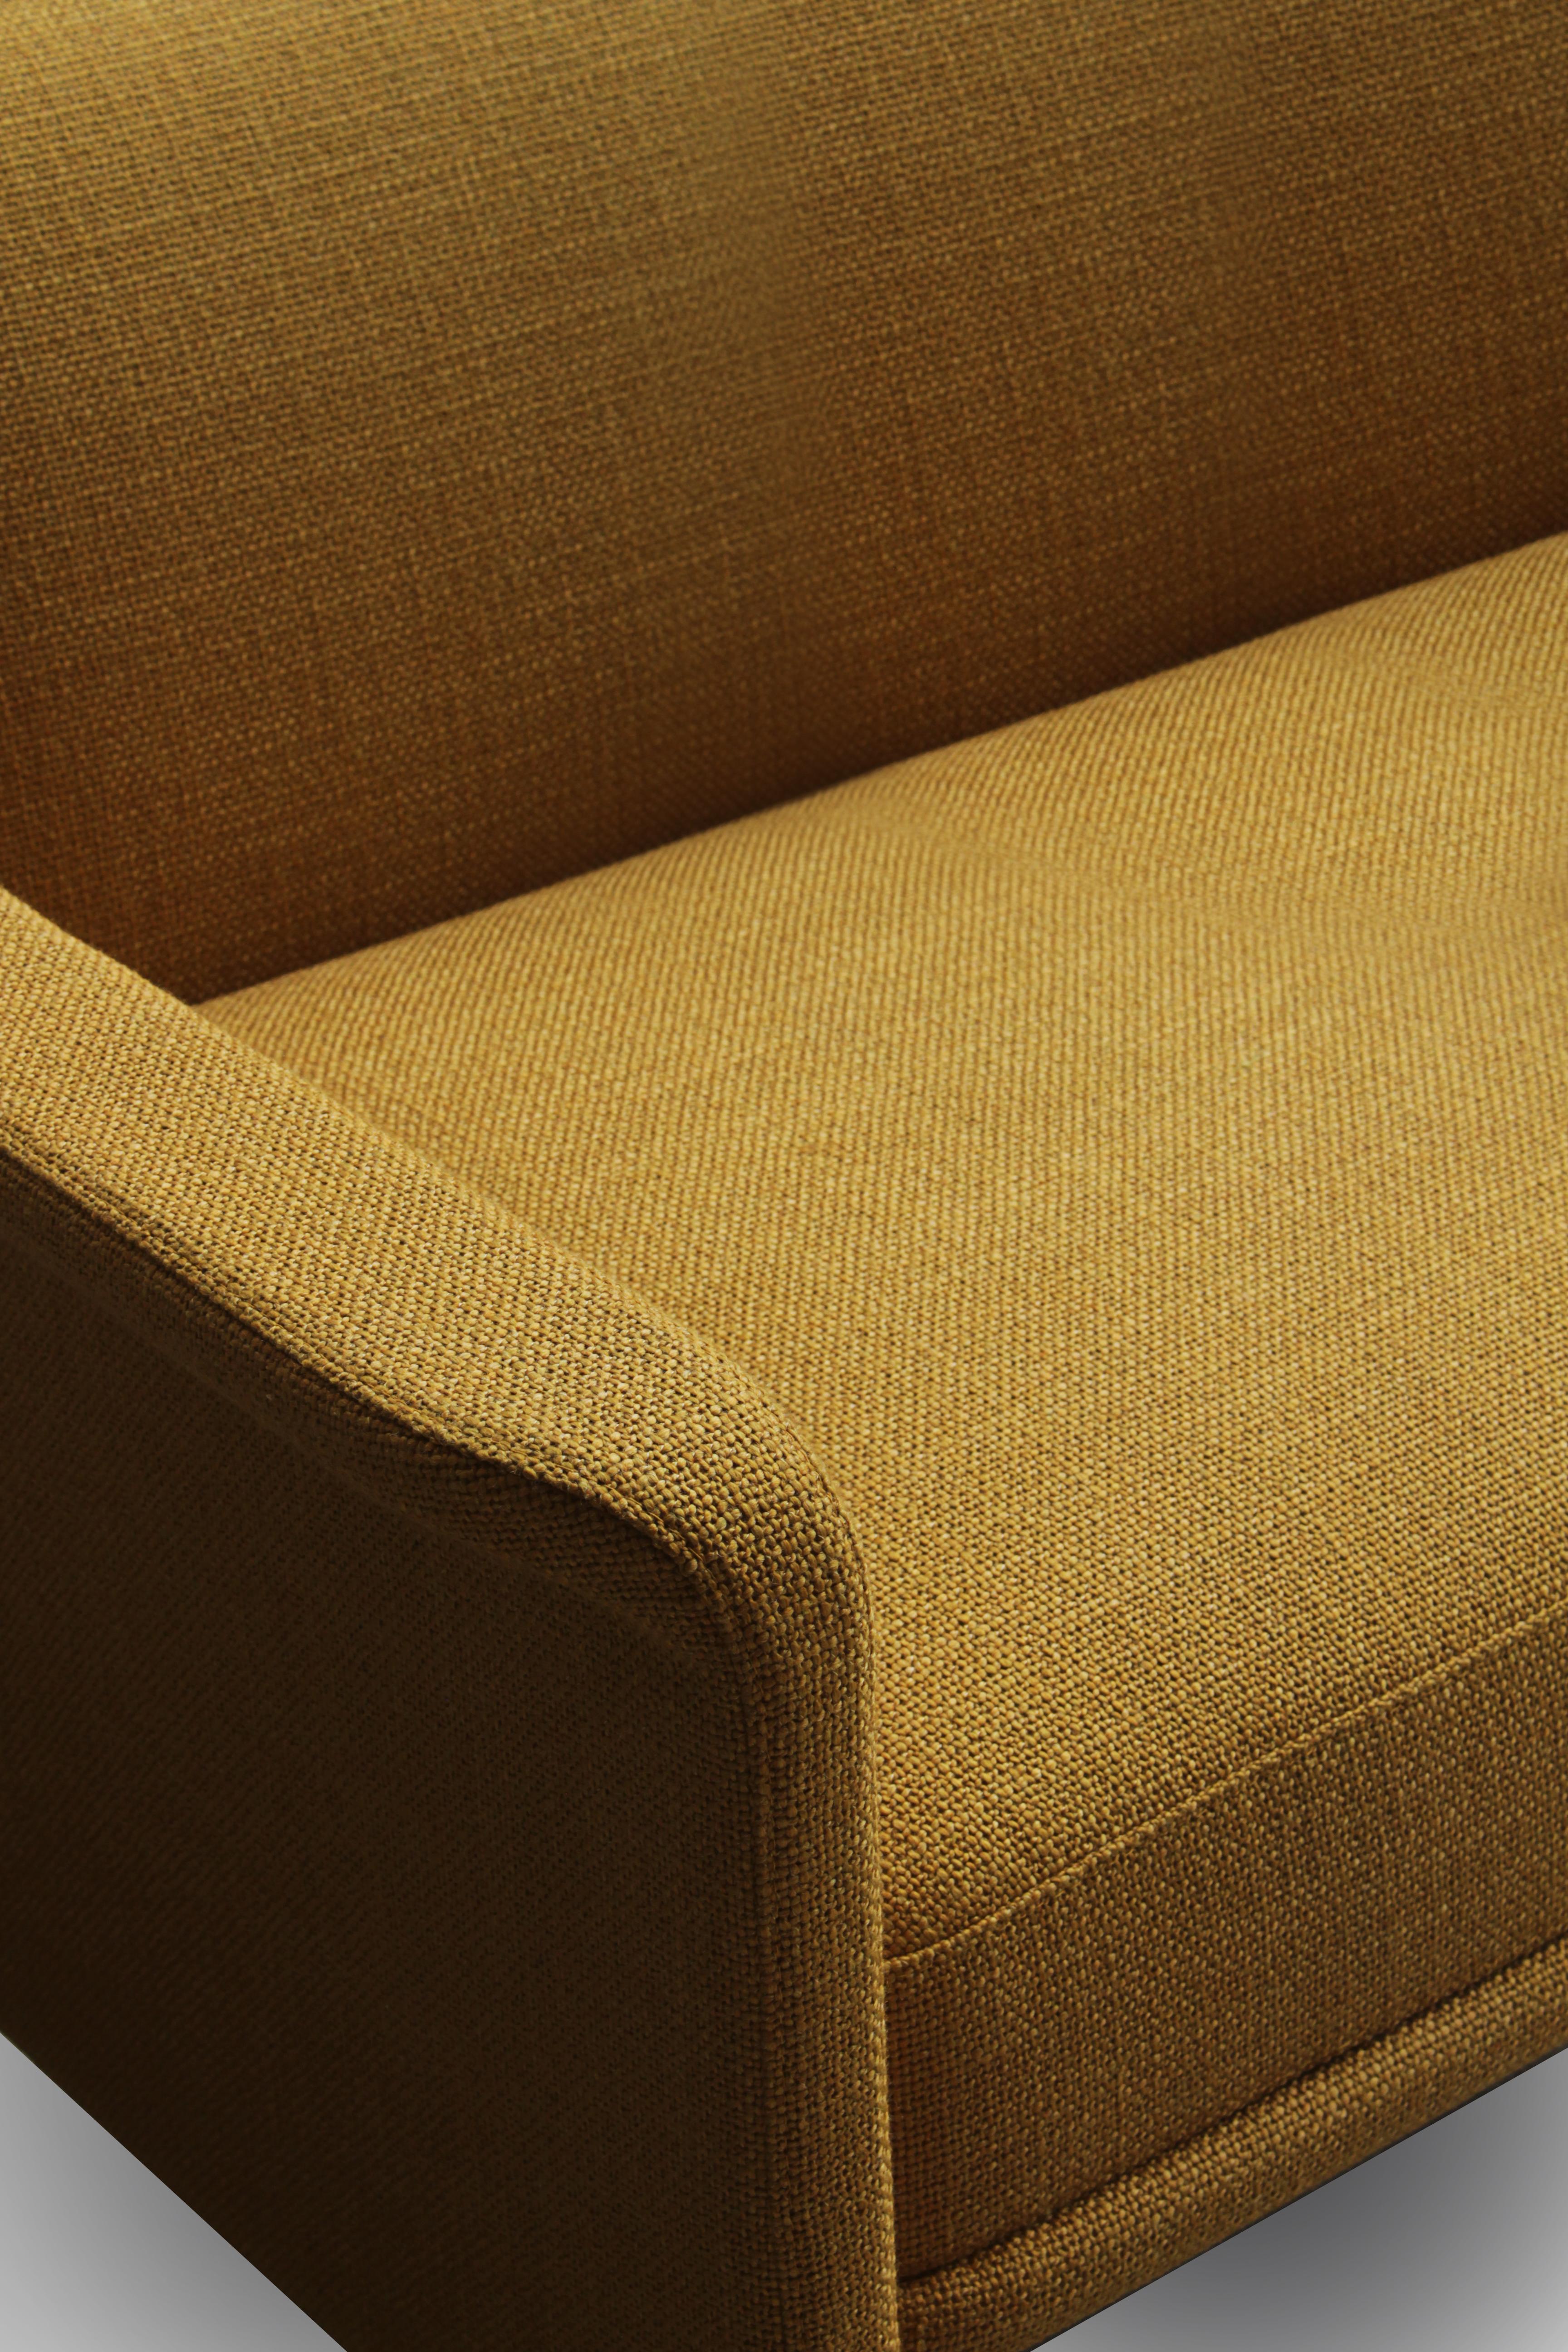 Contemporary Modern Carson 2 Seat Sofa in Yellow Fabric by Collector Studio In New Condition For Sale In Castelo da Maia, PT